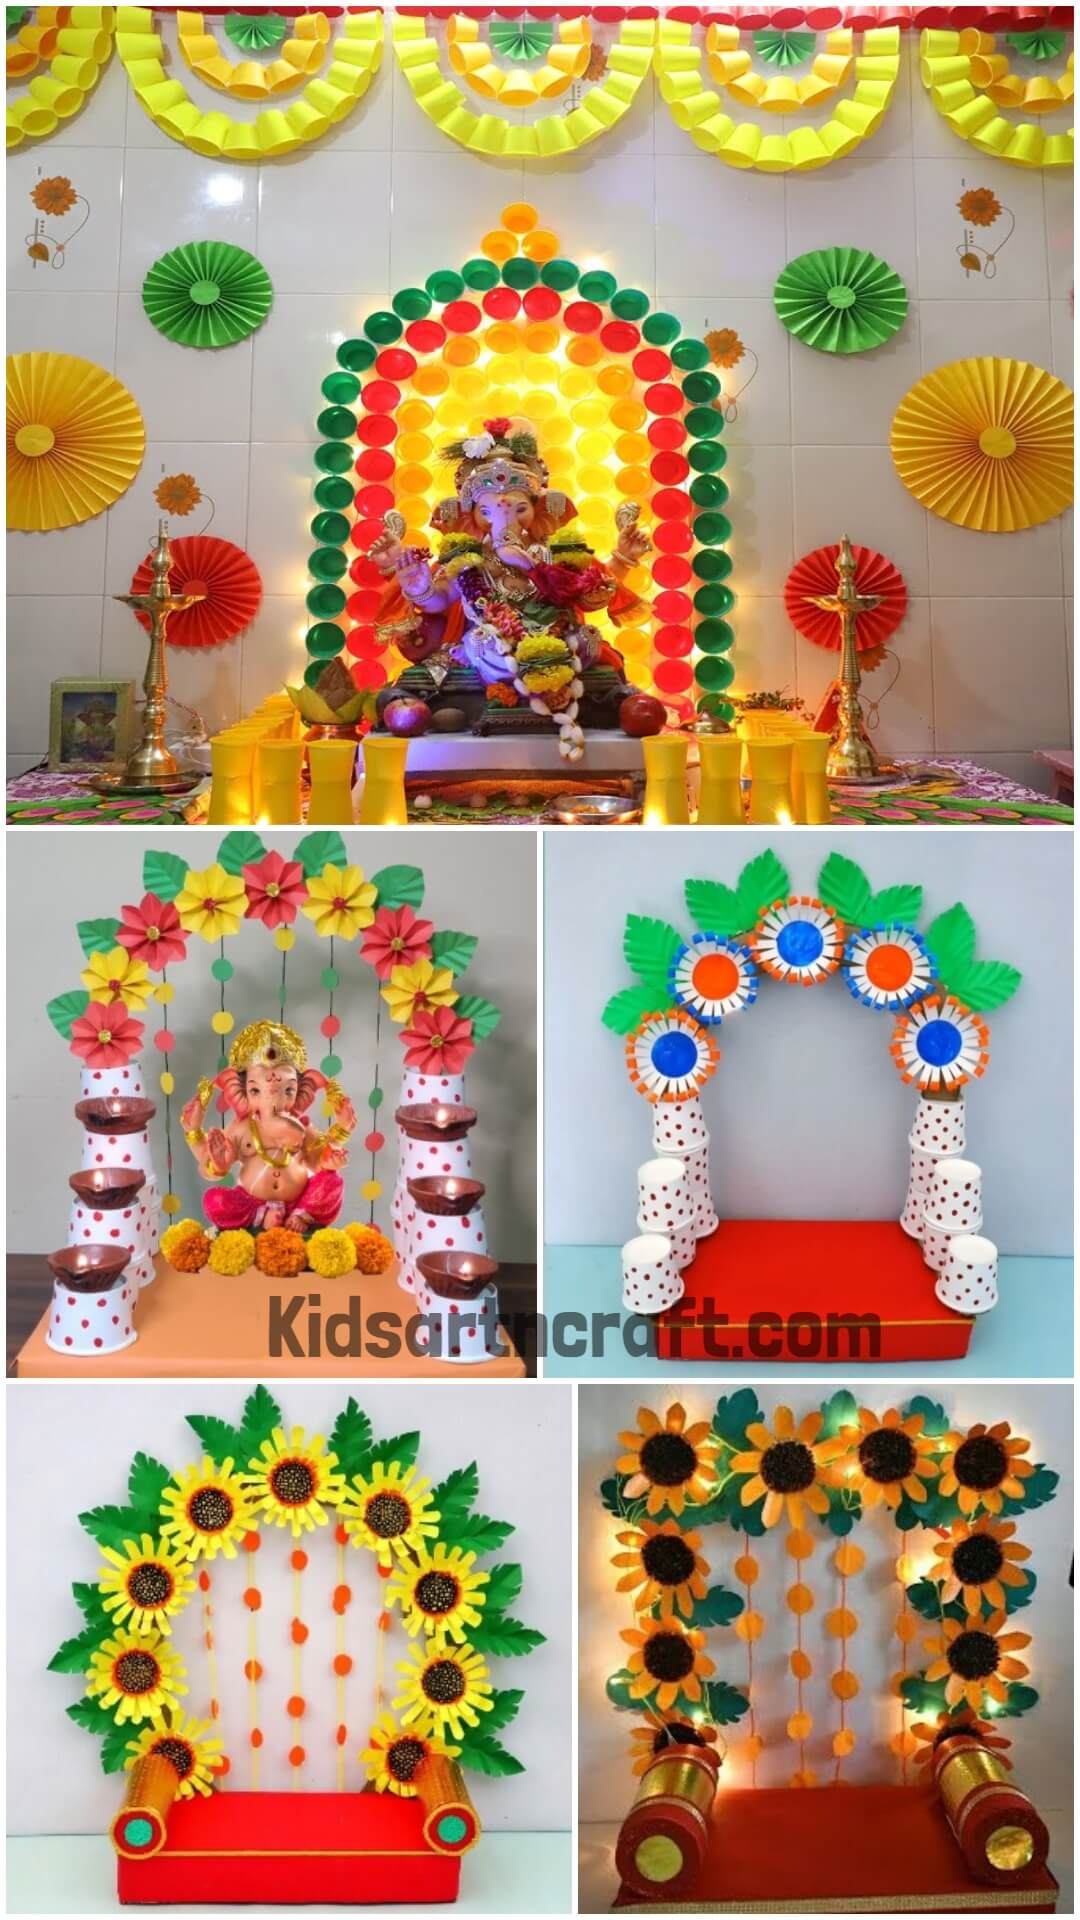 Ganesh murti | Happy ganesh chaturthi images, Goddess artwork, Ganesh art